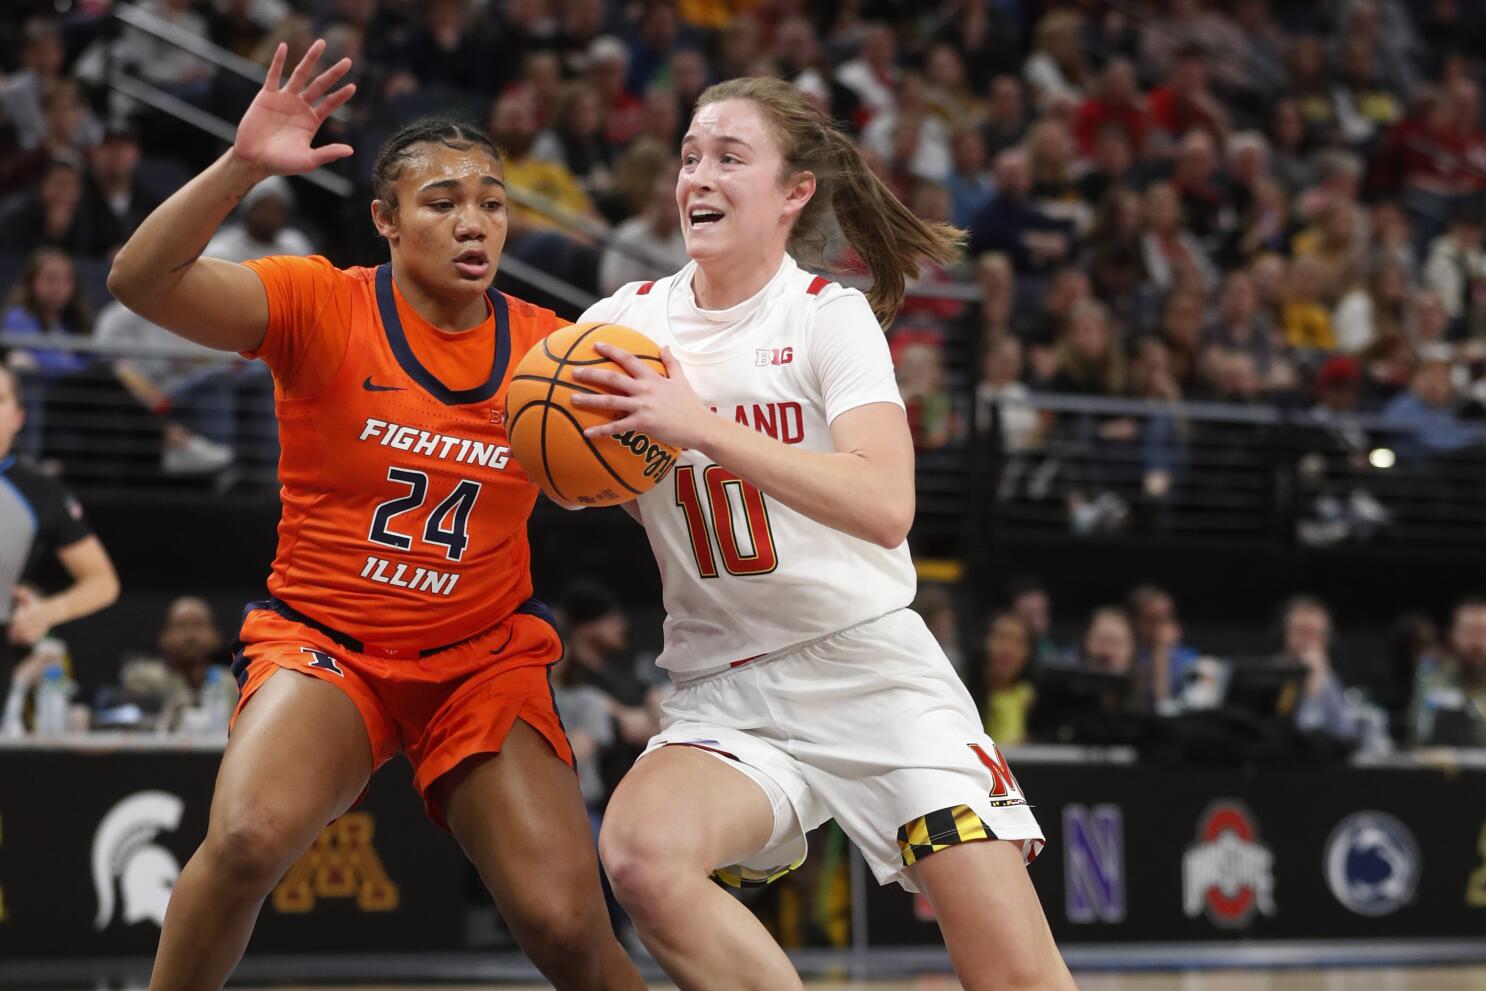 Maryland women's basketball forward Angel Reese to enter transfer